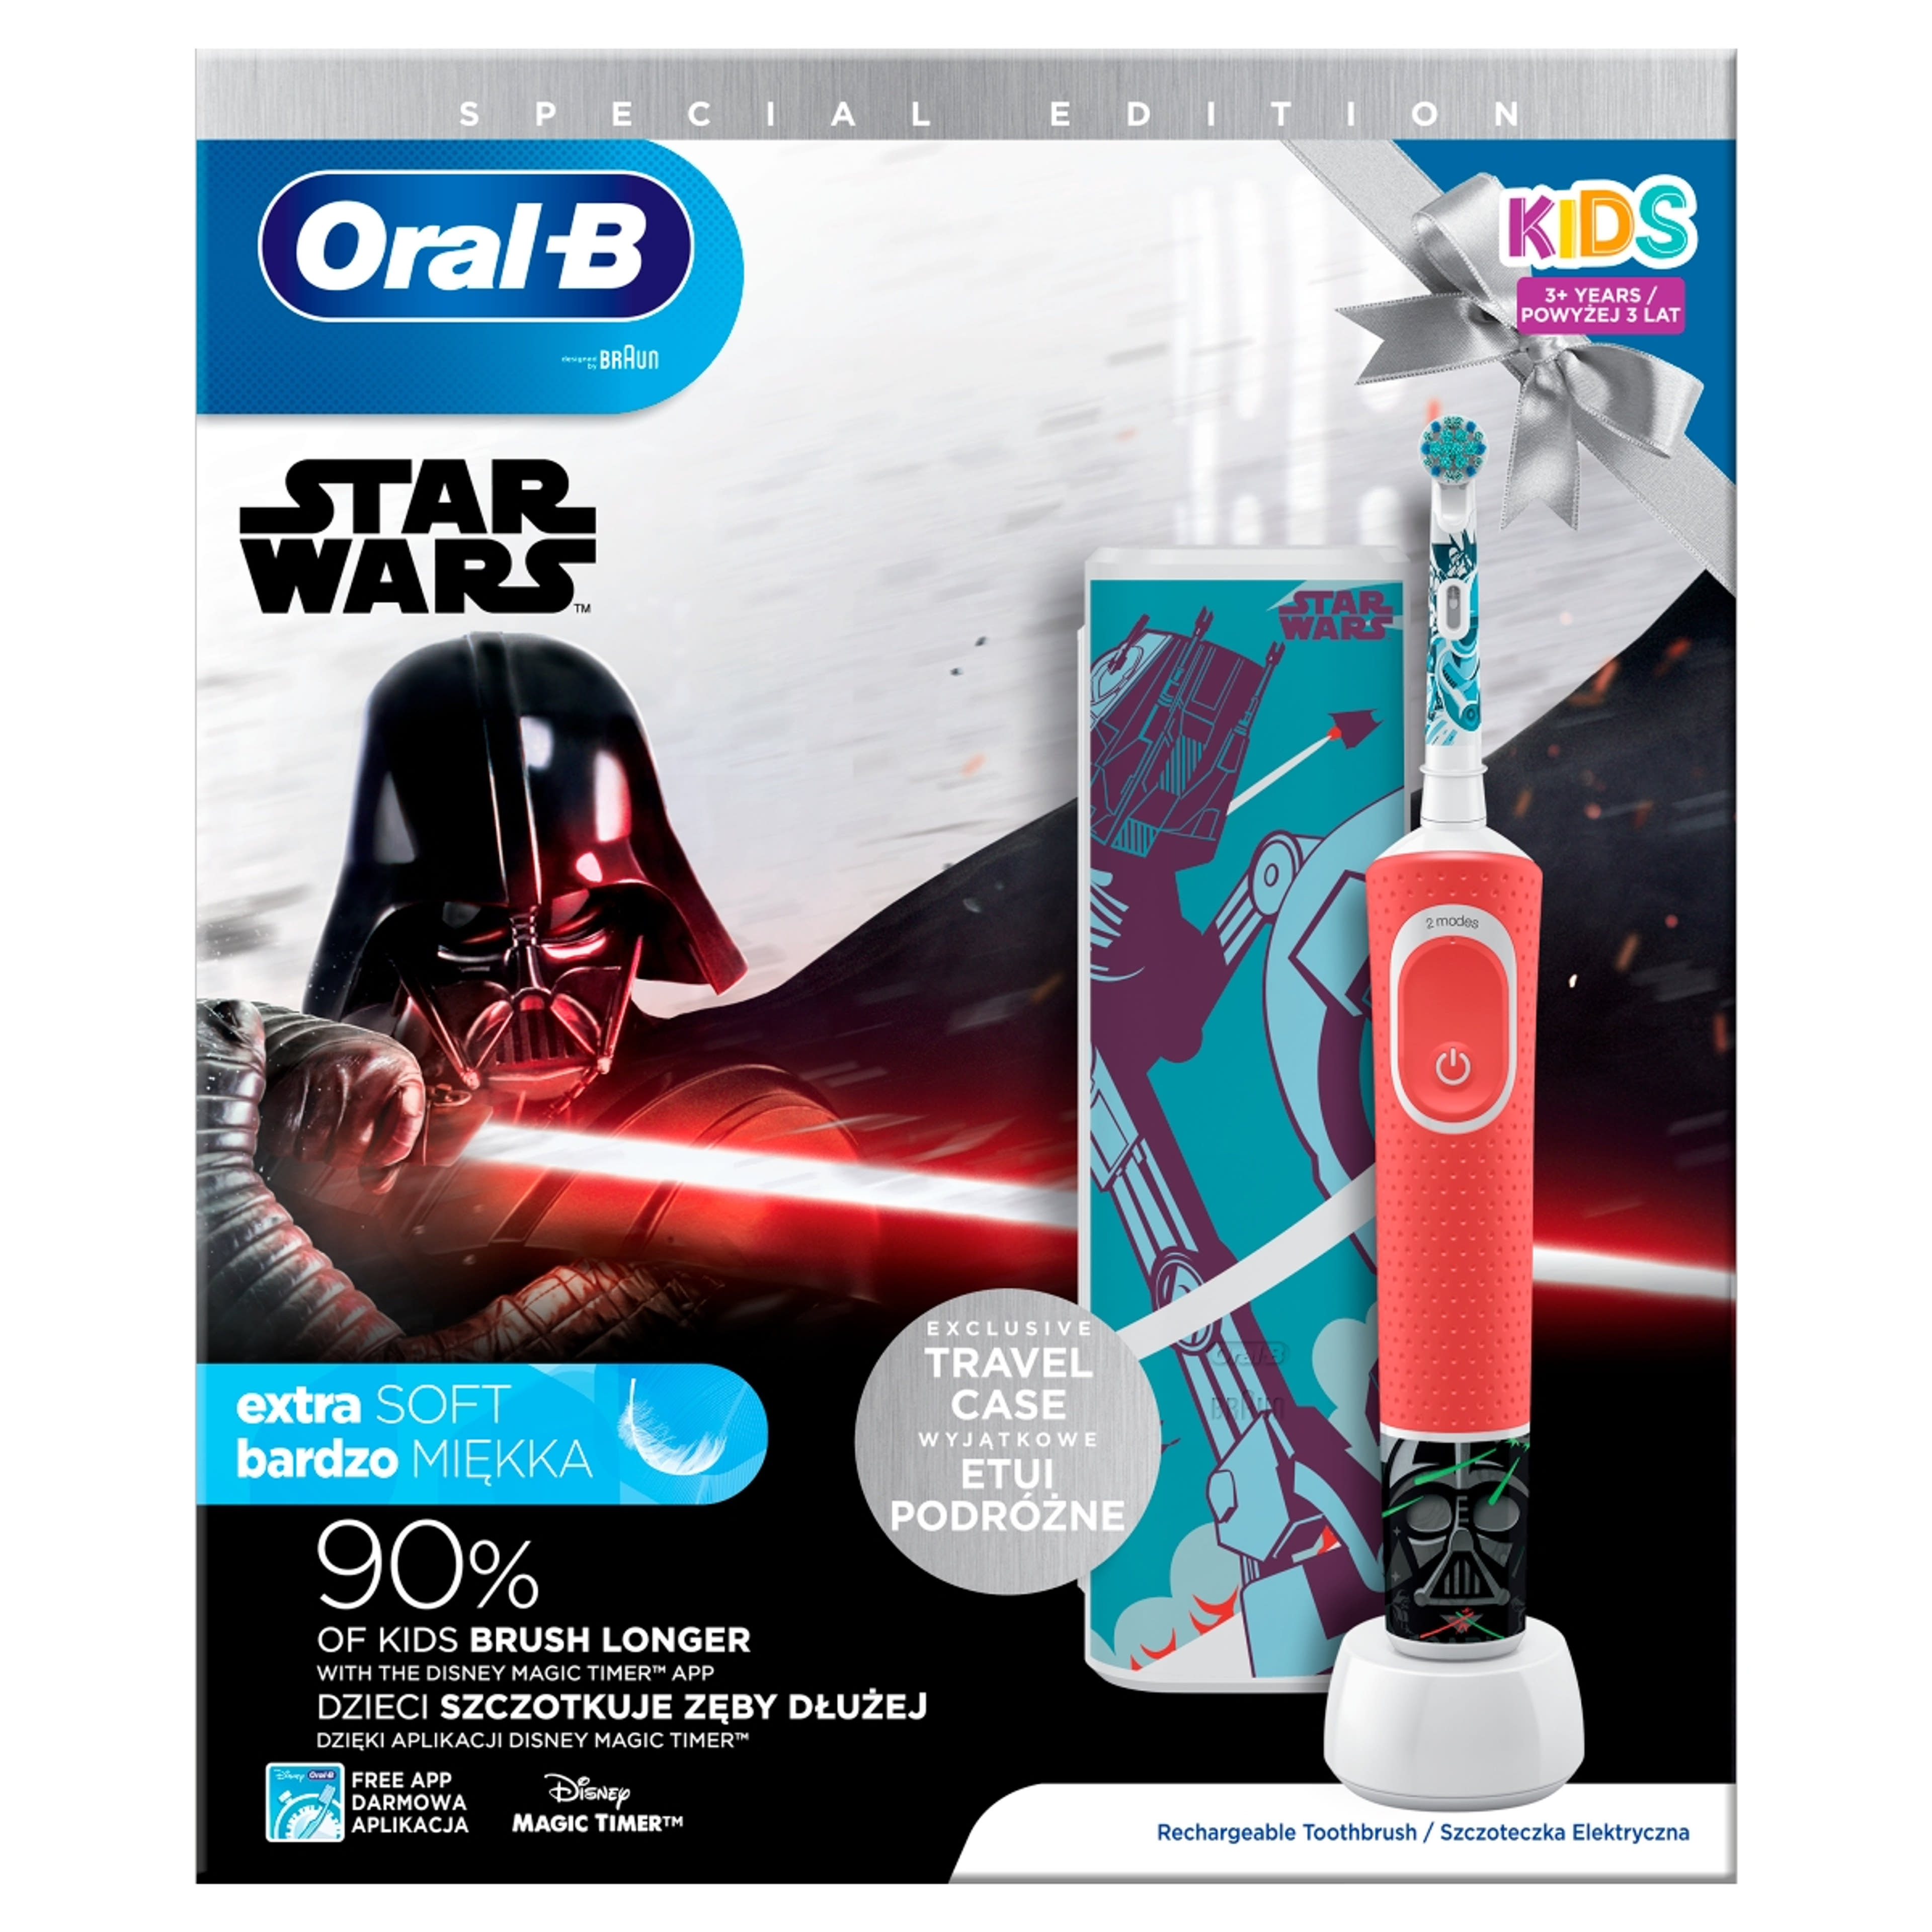 Oral-B Kisd Star Wars elektromos fogkefe utazótokkal -1 db